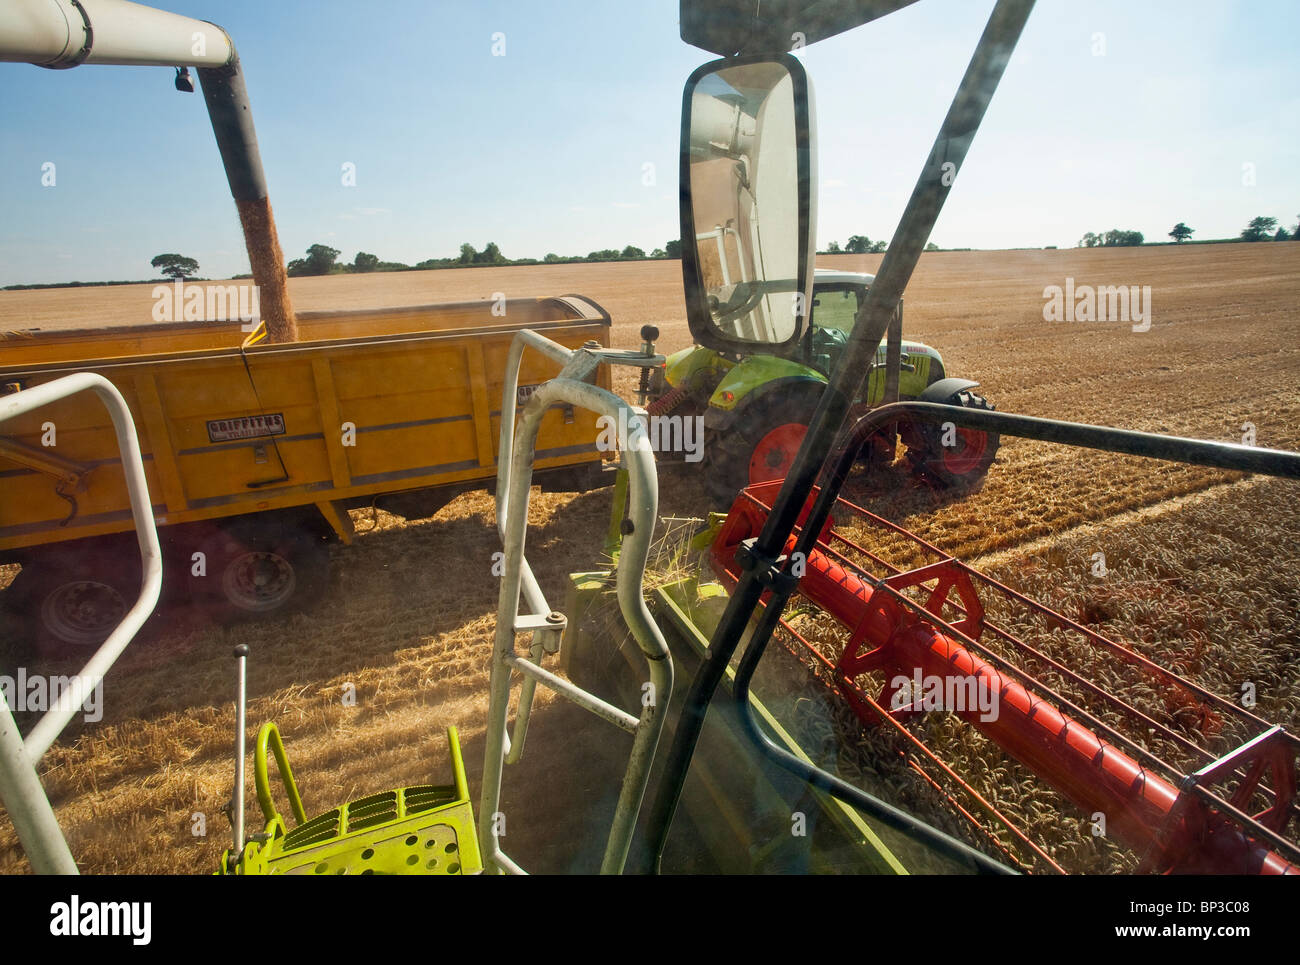 Discharging wheat grain from a combine harvester Stock Photo